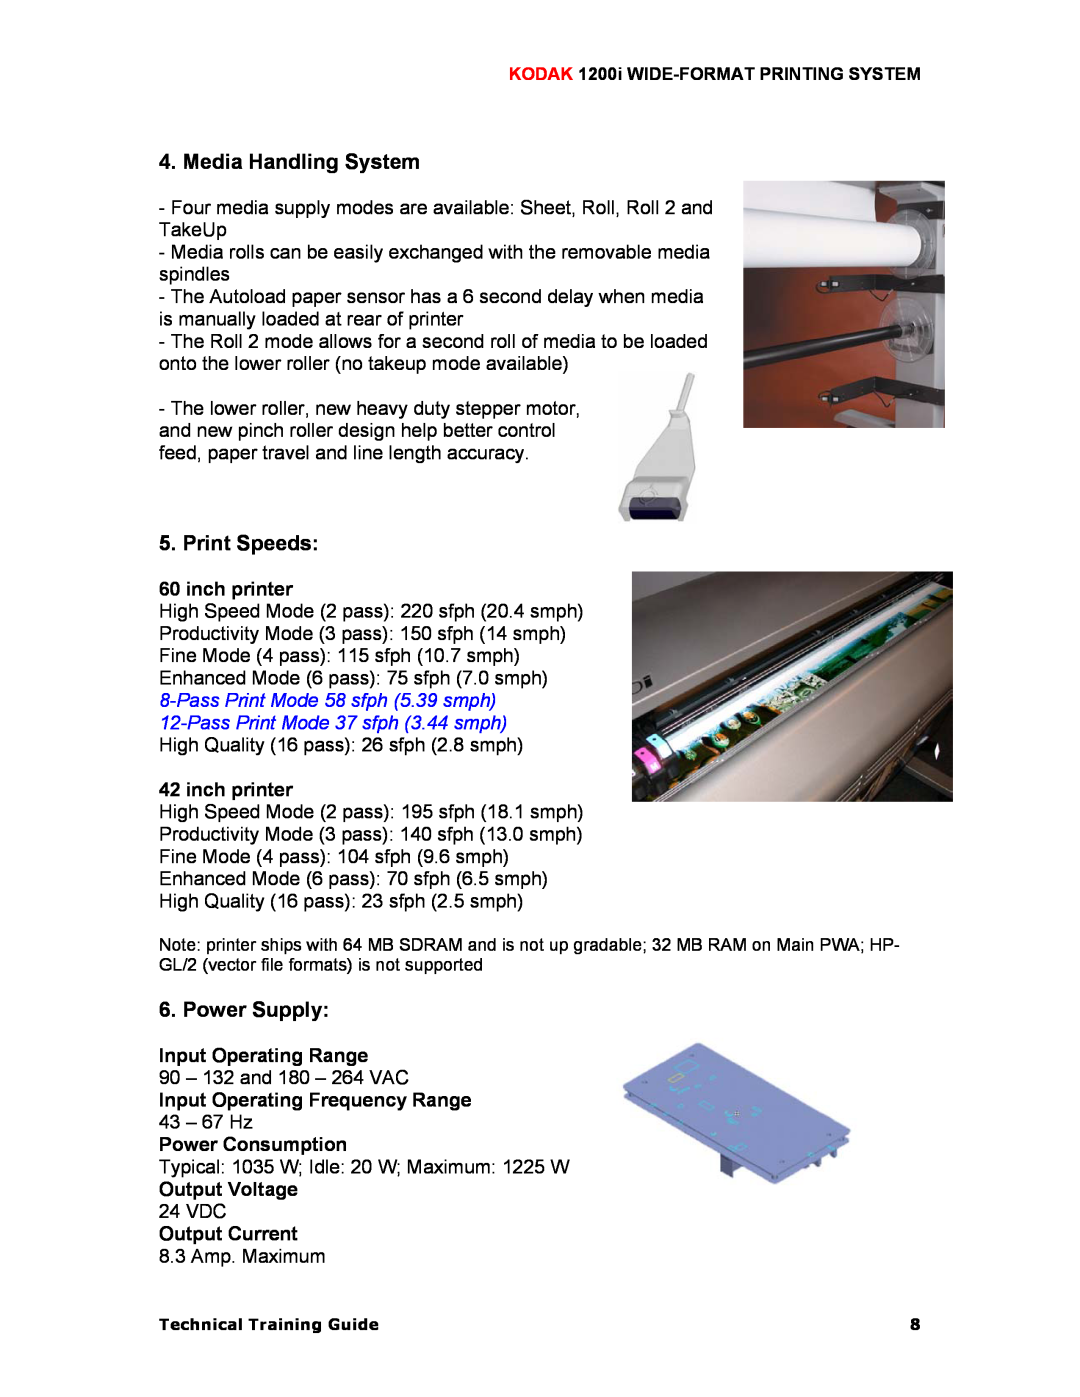 Kodak 1200I manual Media Handling System, Print Speeds, Power Supply, inch printer, PassPrint Mode 58 sfph 5.39 smph 